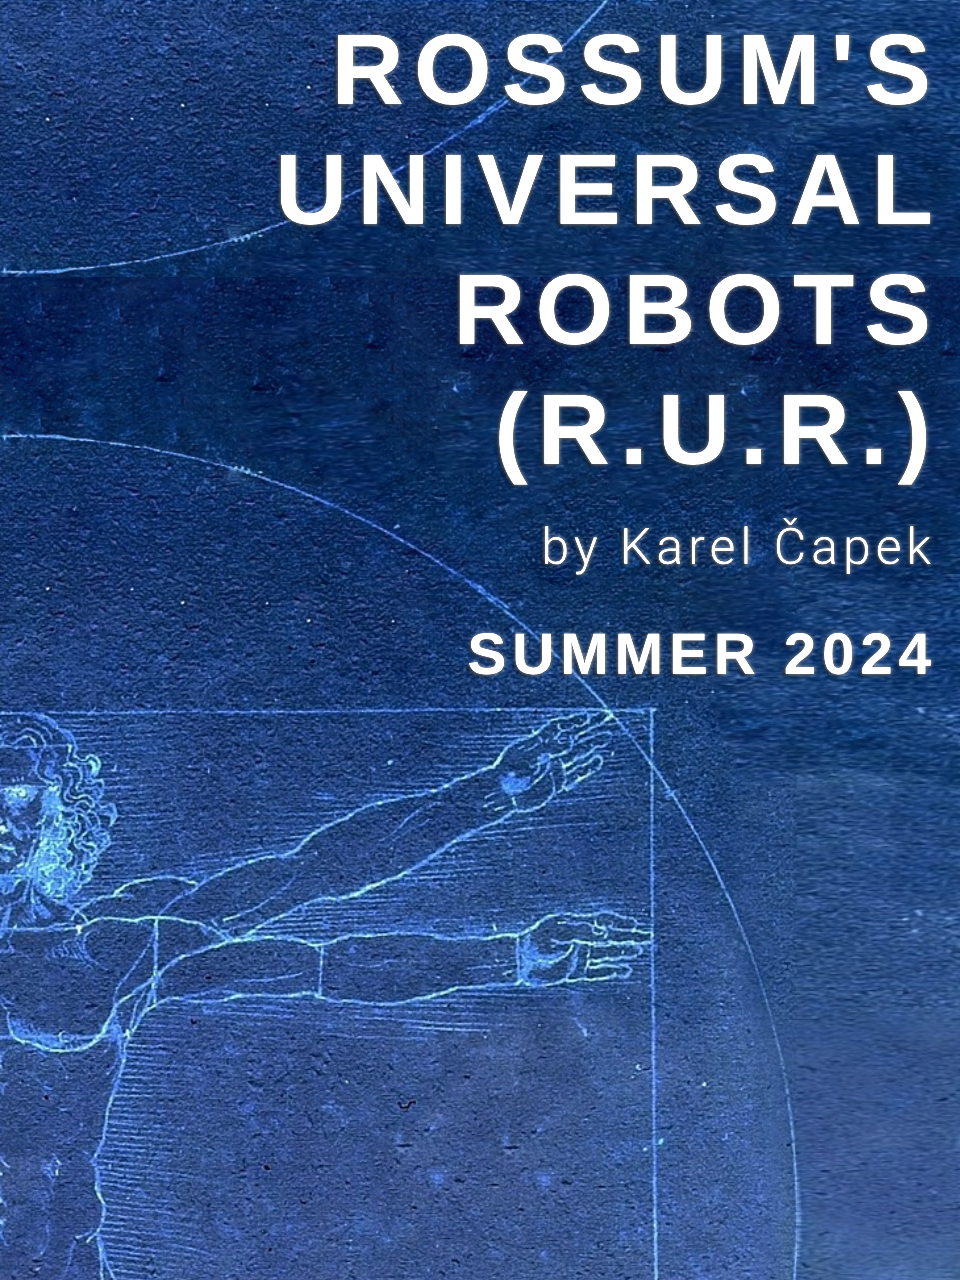 RUR Rossum's Universal Robots Karel Capek teaser poster depicting blue-scale Vitruvian Man